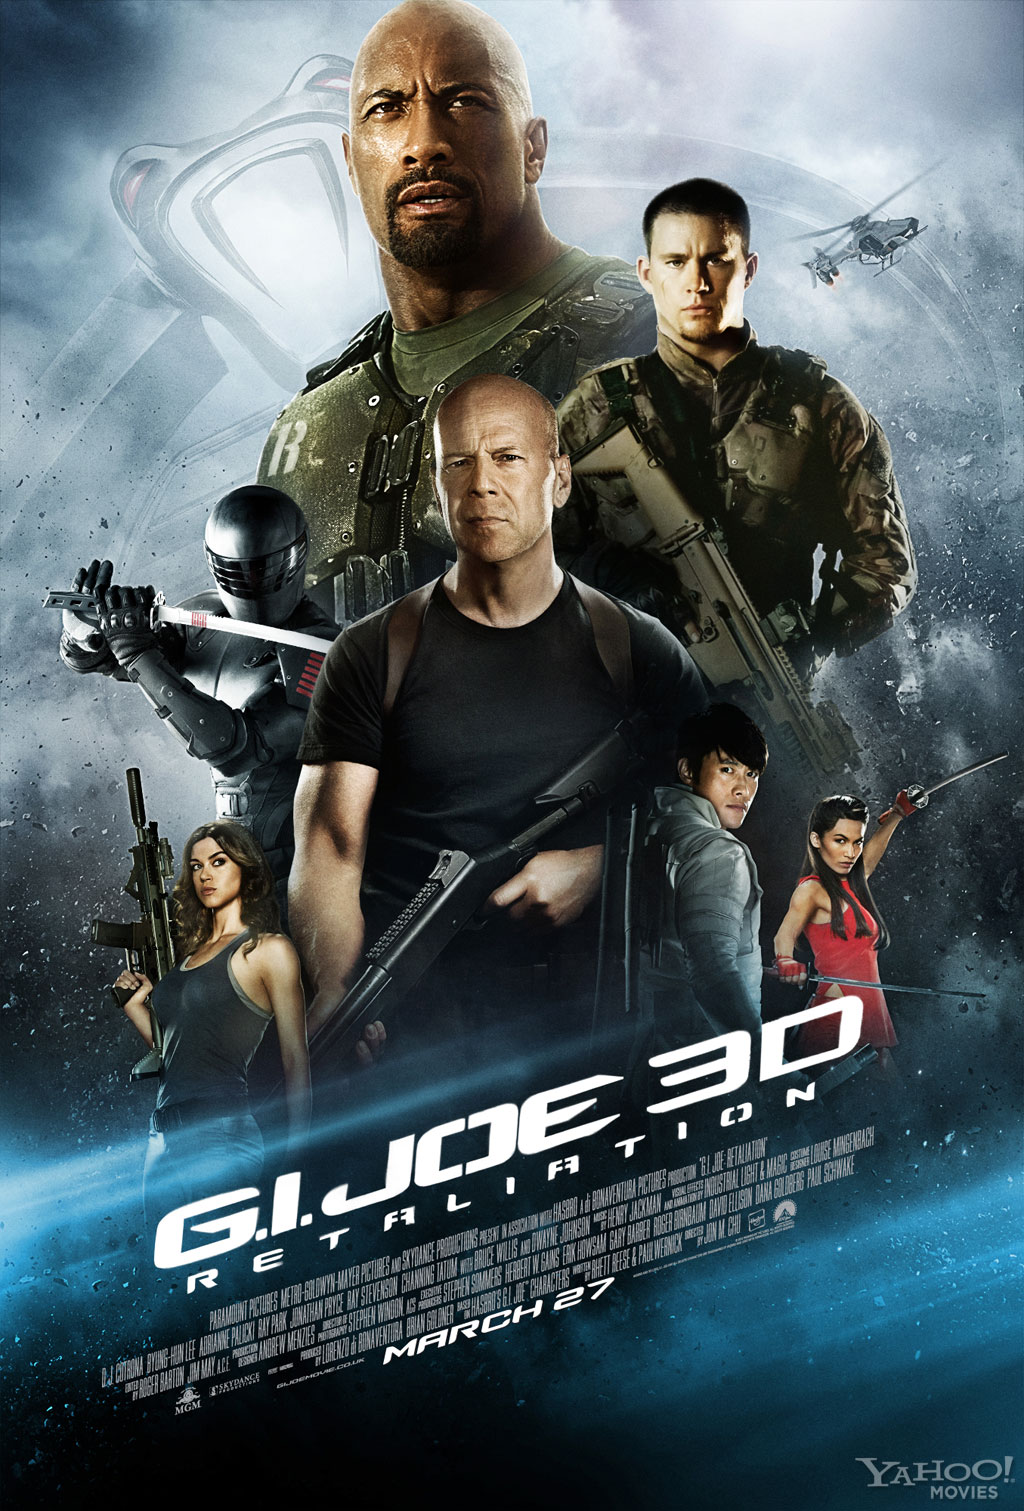 G.I. Joe: Retaliation - blackfilm.com - Black Movies, Television, and